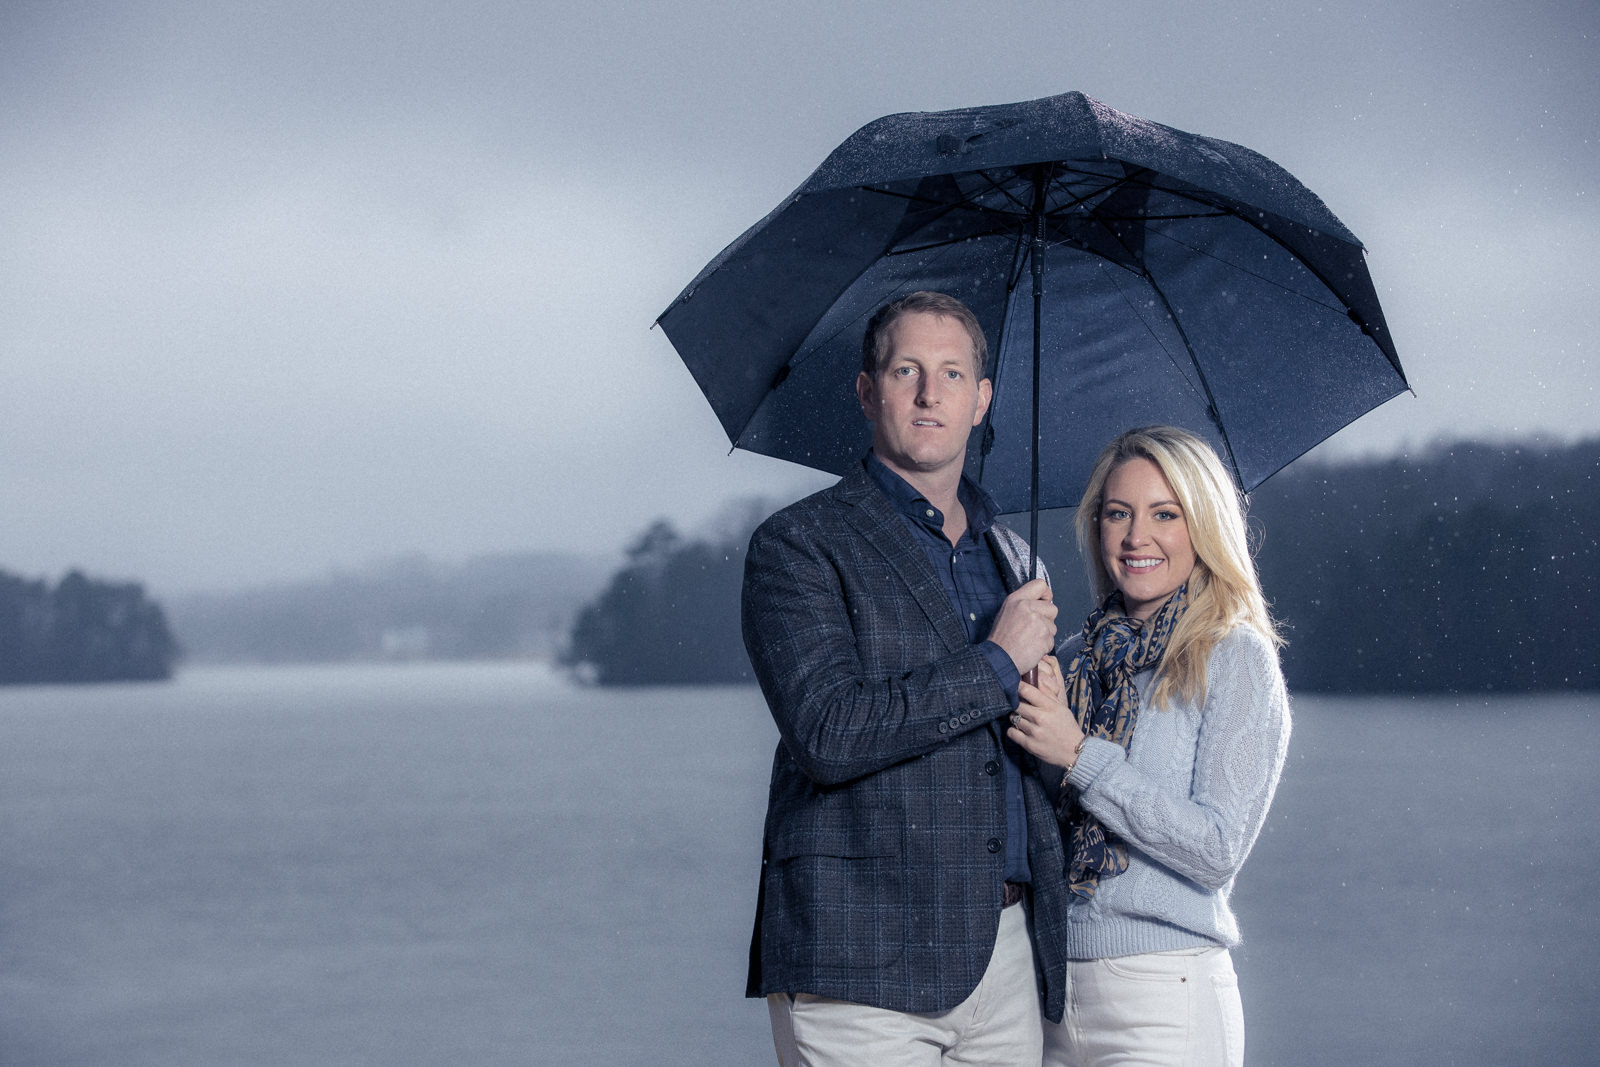 Engagement portraits in Atlanta Georgia near the lake under and umbrella